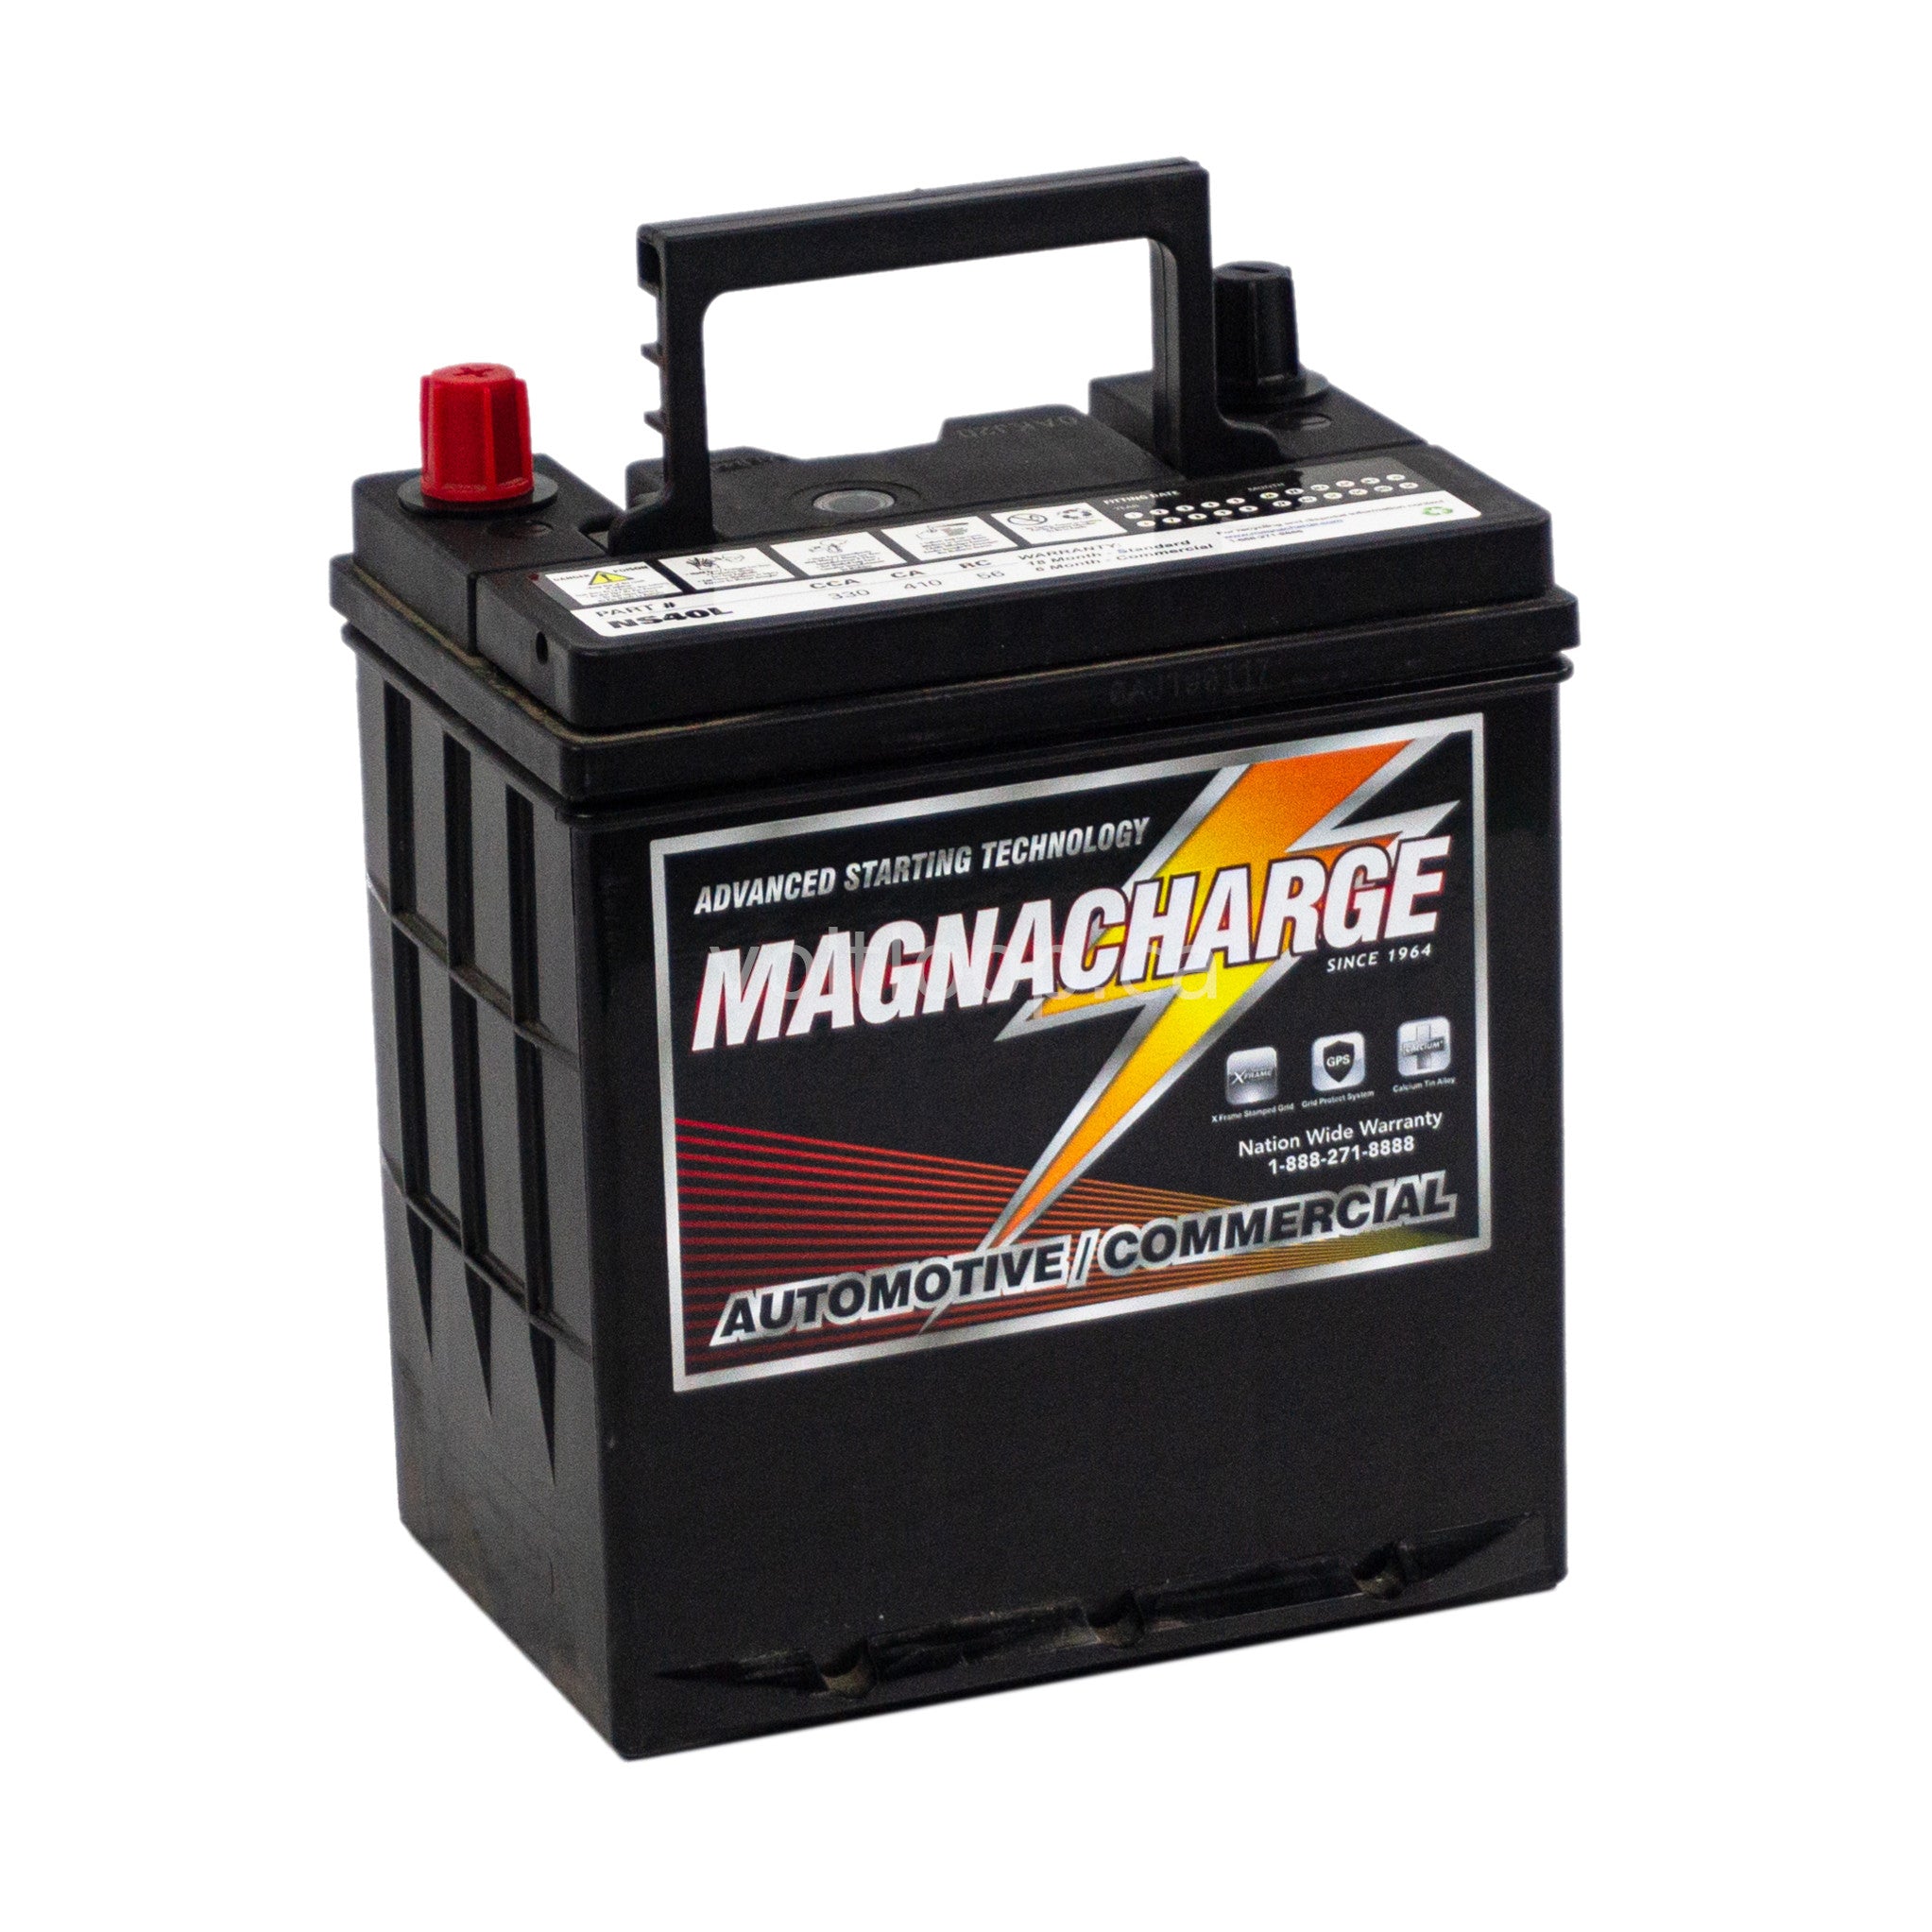 Magnacharge NS40L 12V Car Battery